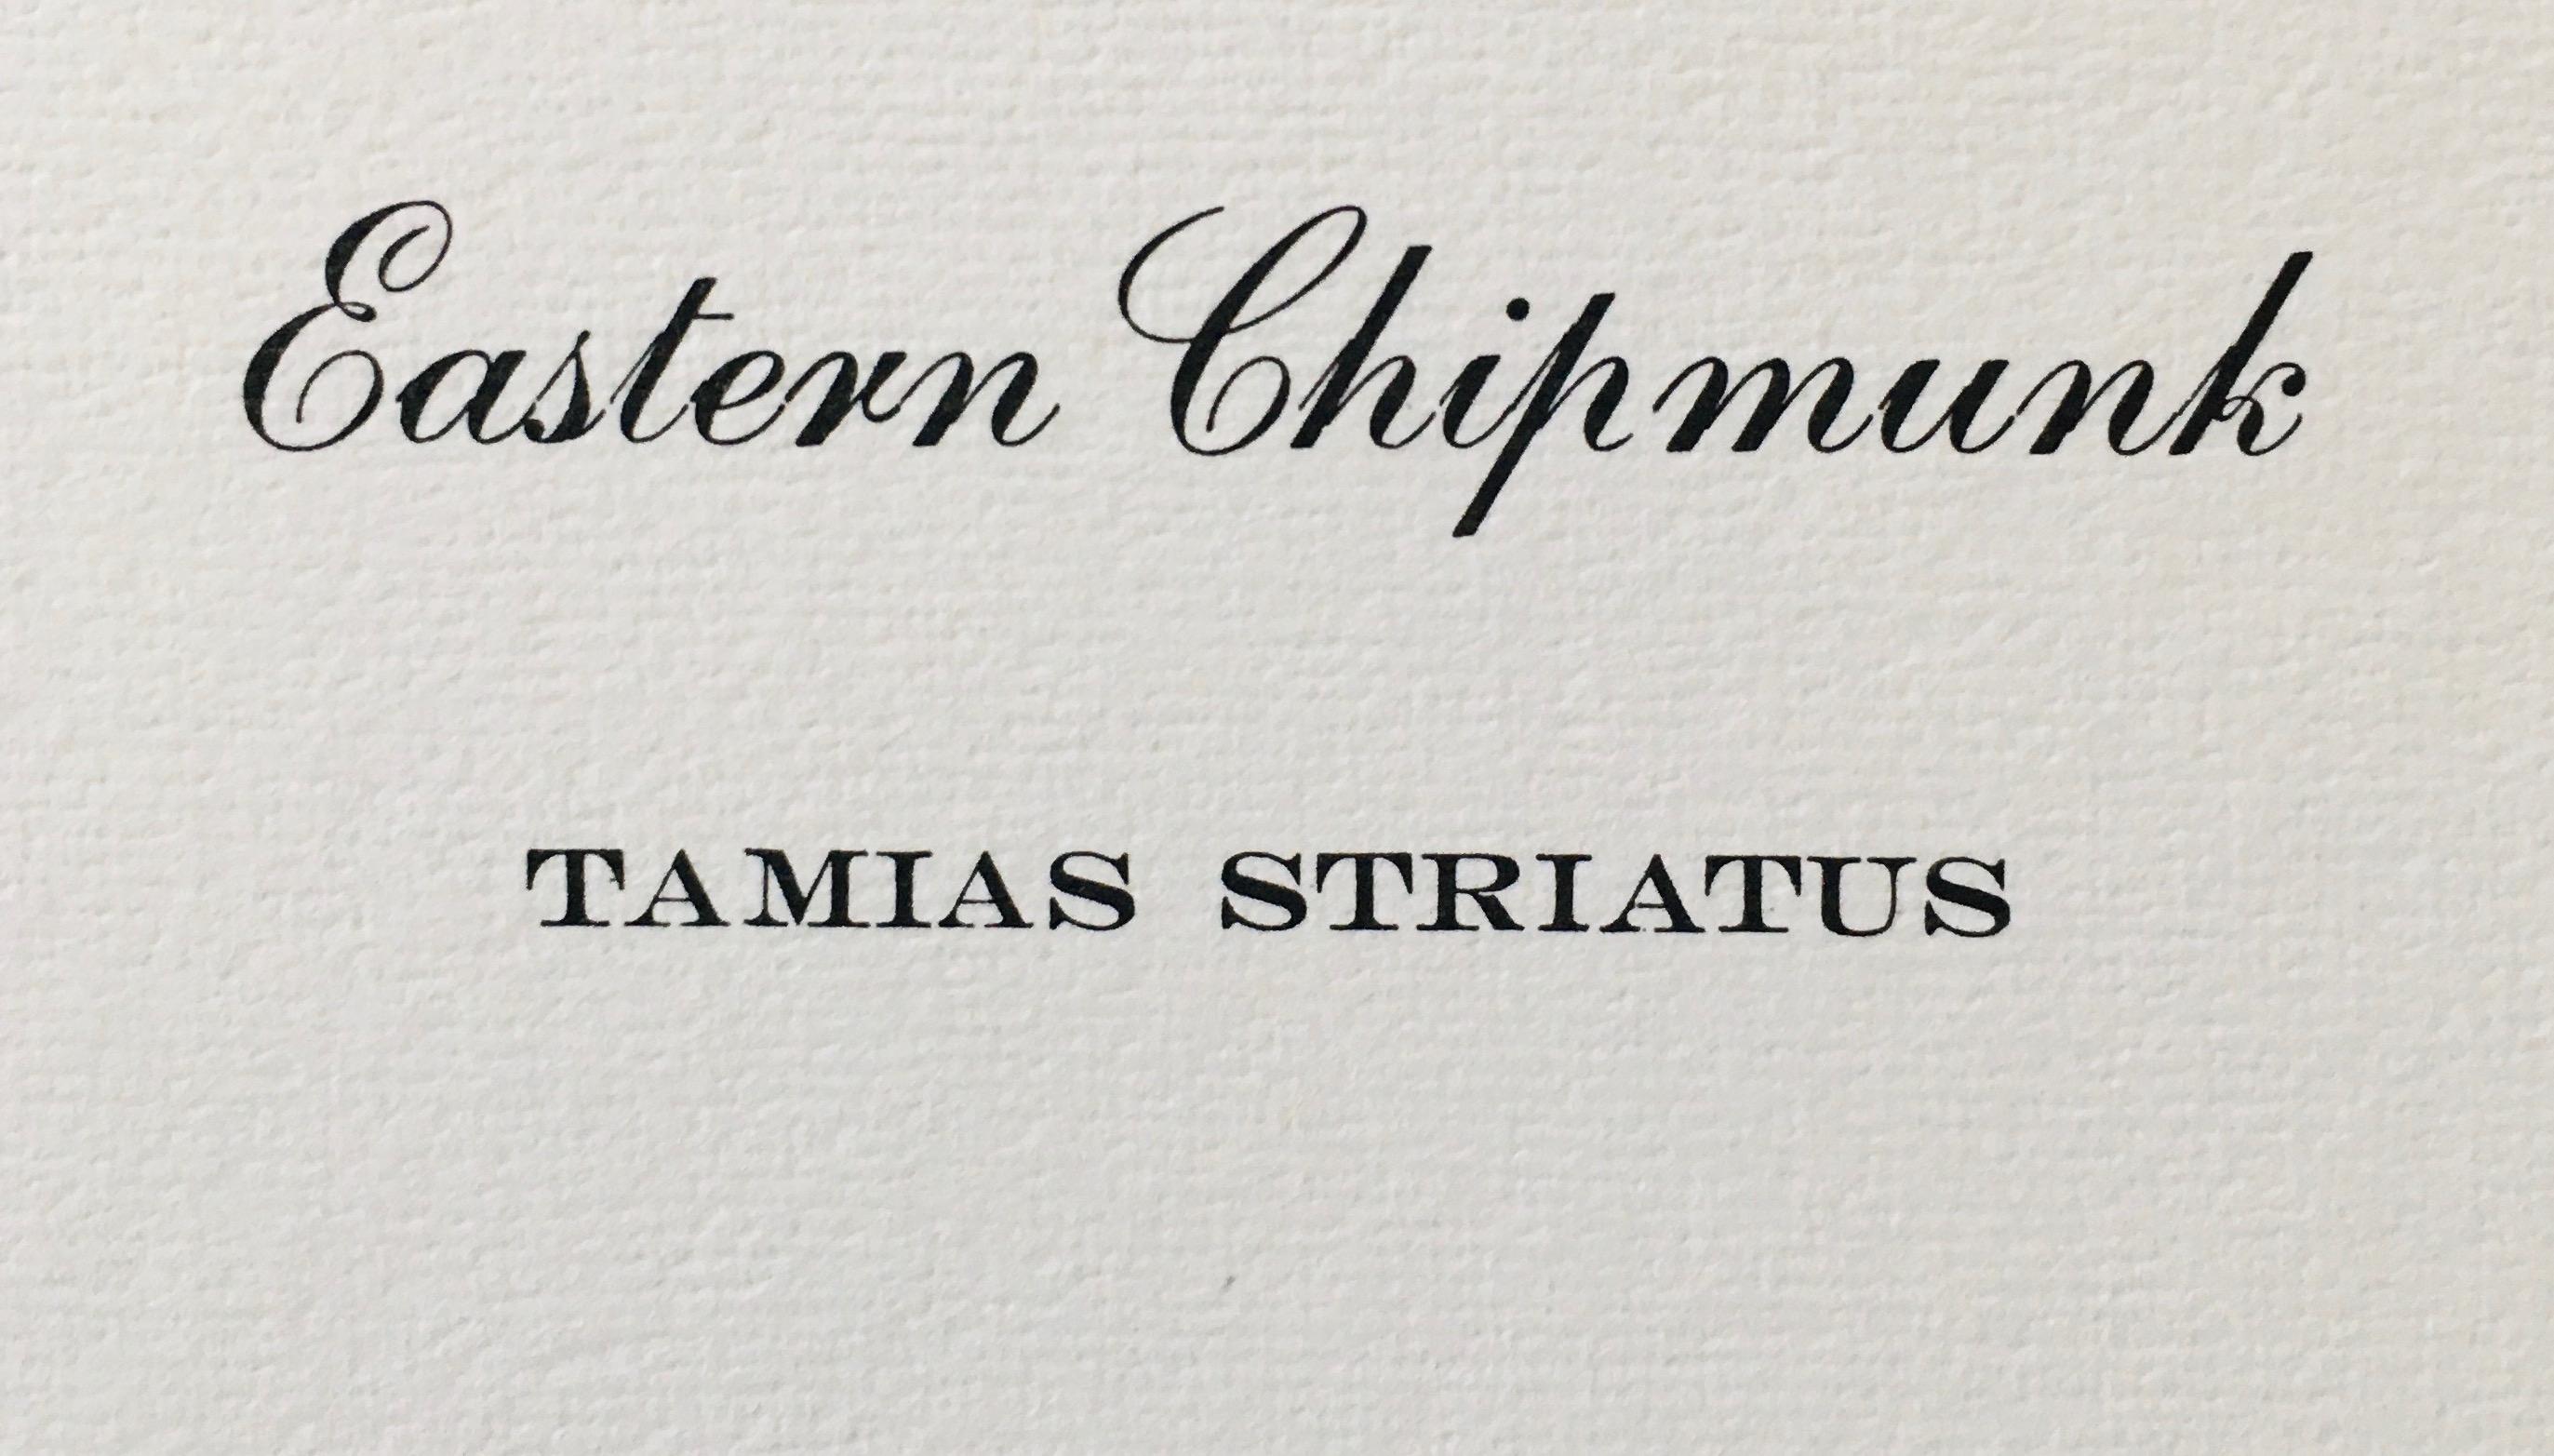 1973 Richard Timm - EASTERN CHIPMUNK - Signed - 22” x 28” TAMIAS STRIATUS 051930